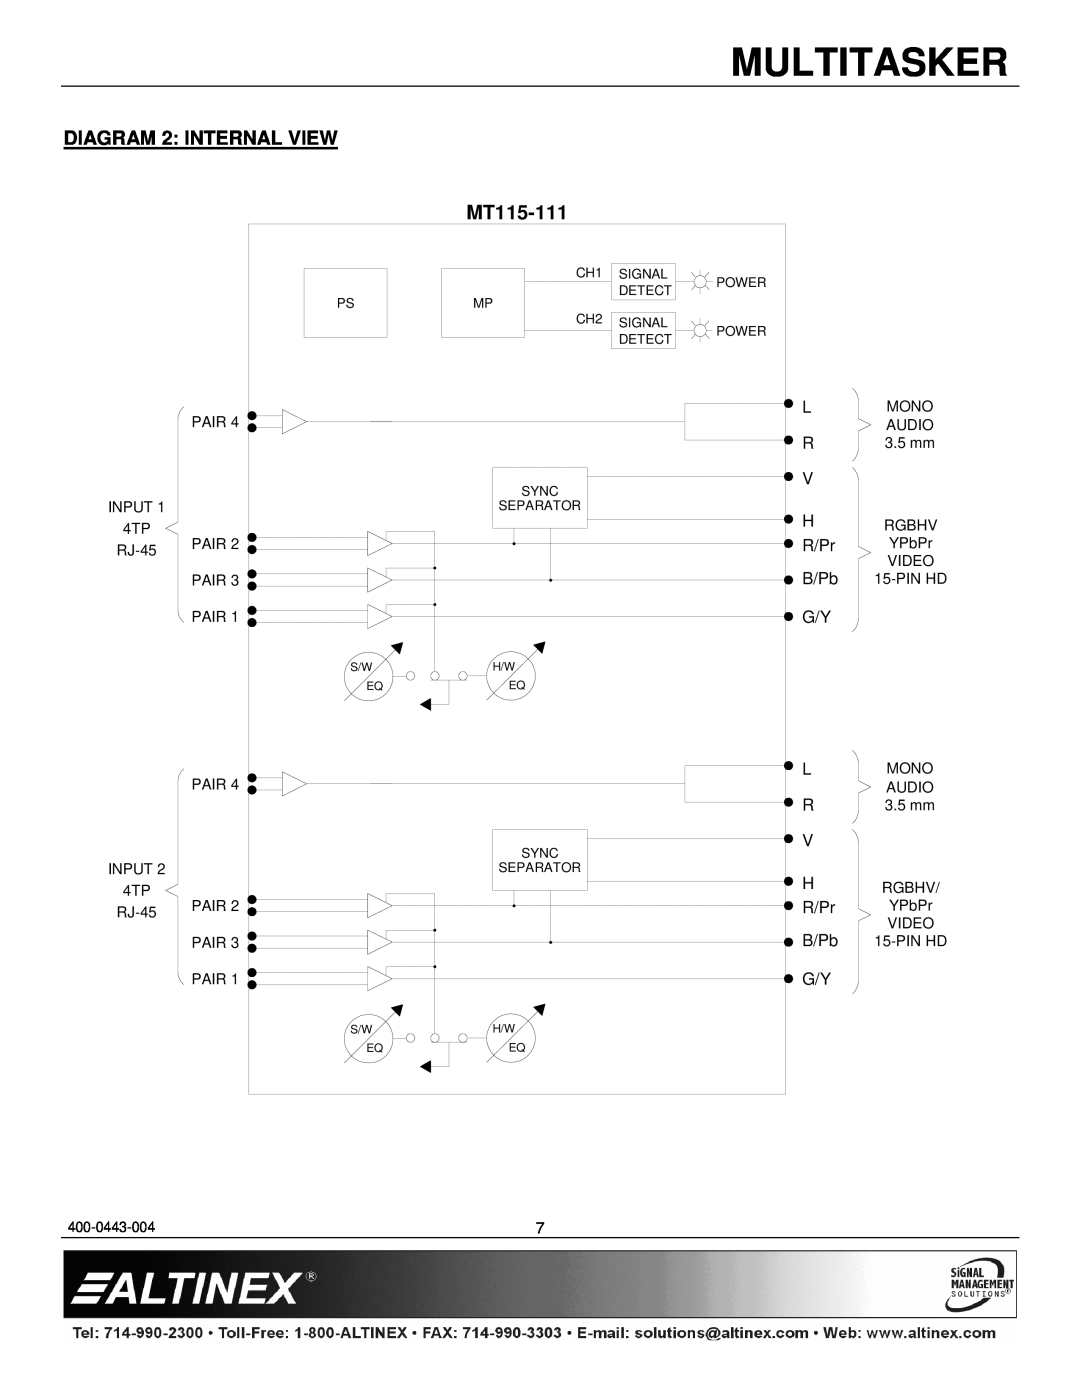 Altinex MT115-111 manual Multitasker, DIAGRAM 2 INTERNAL VIEW 